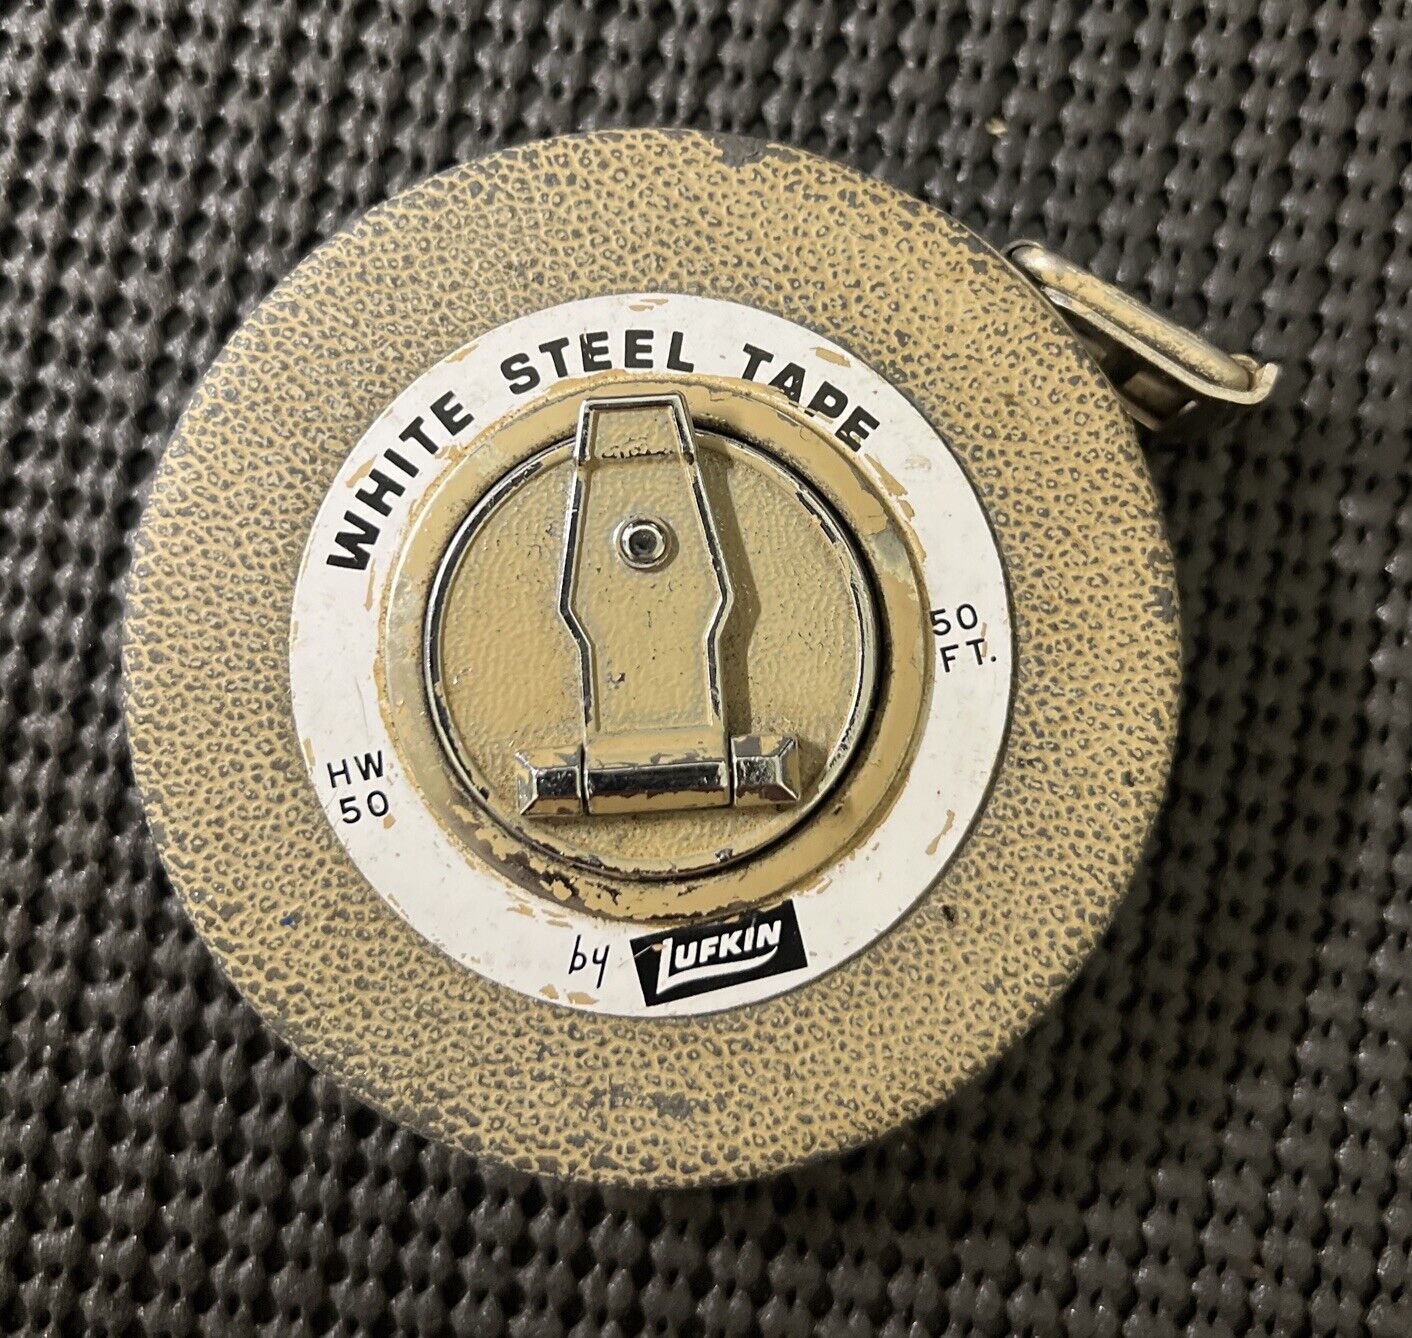 Vintage Lufkin White Steel Tape Measure (HW 50) - 50'